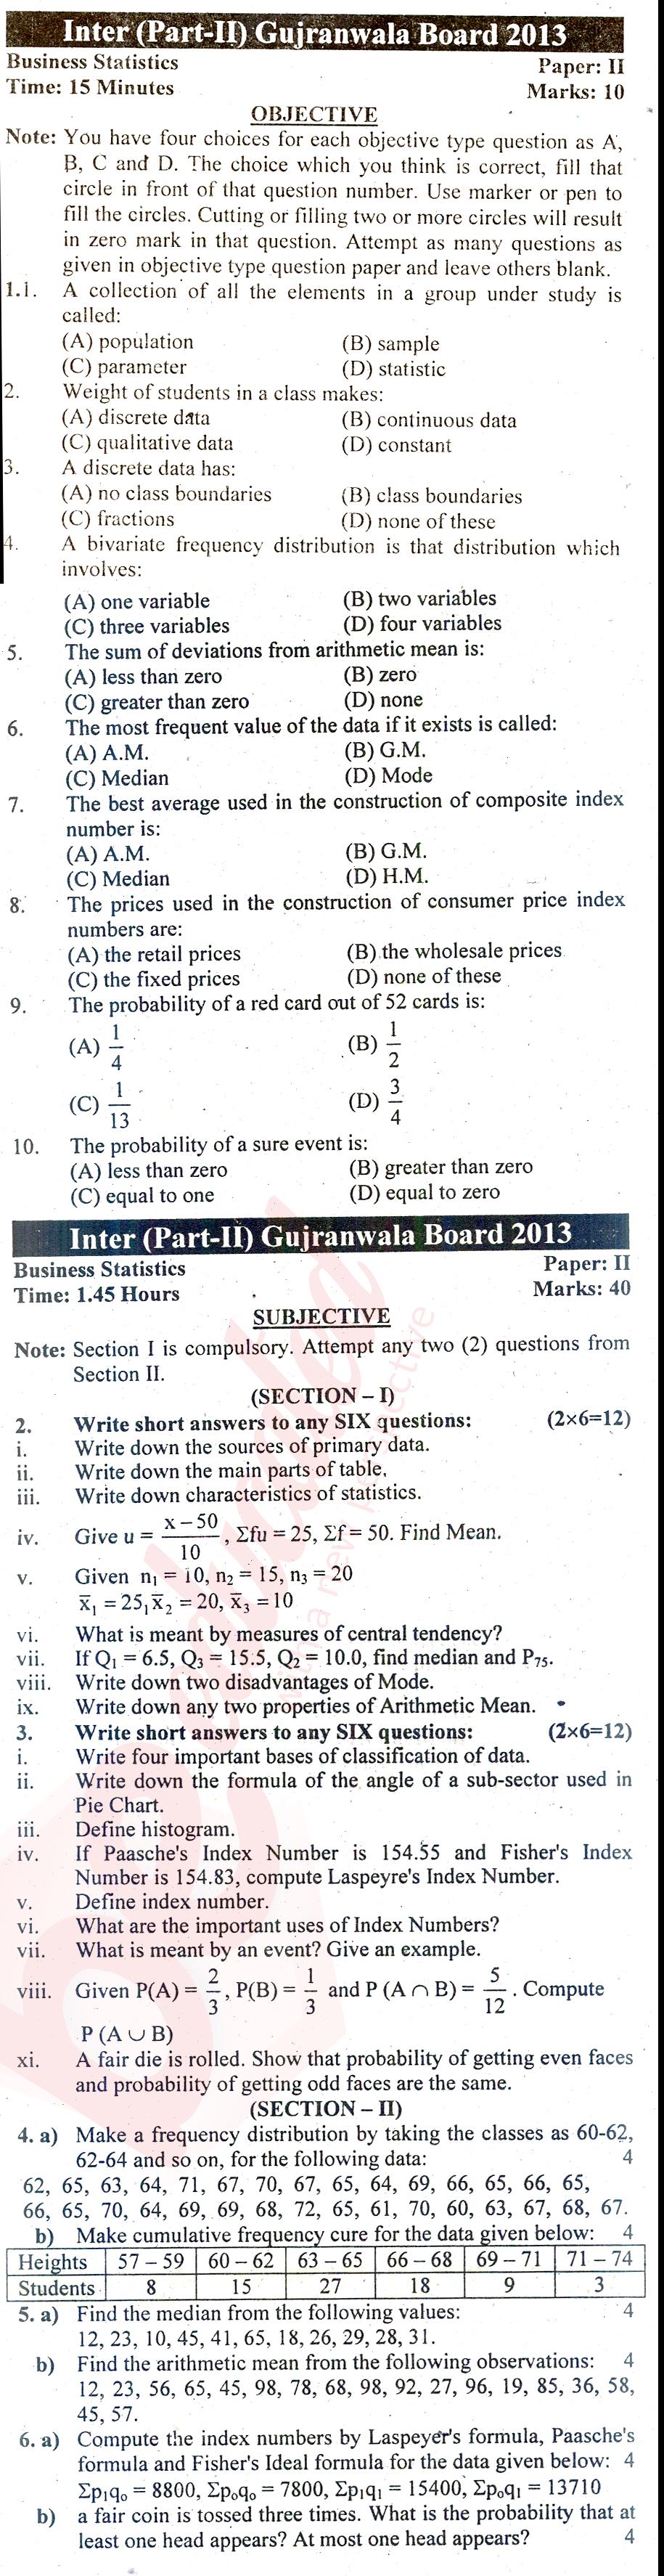 Business Statistics ICOM Part 2 Past Paper Group 1 BISE Gujranwala 2013